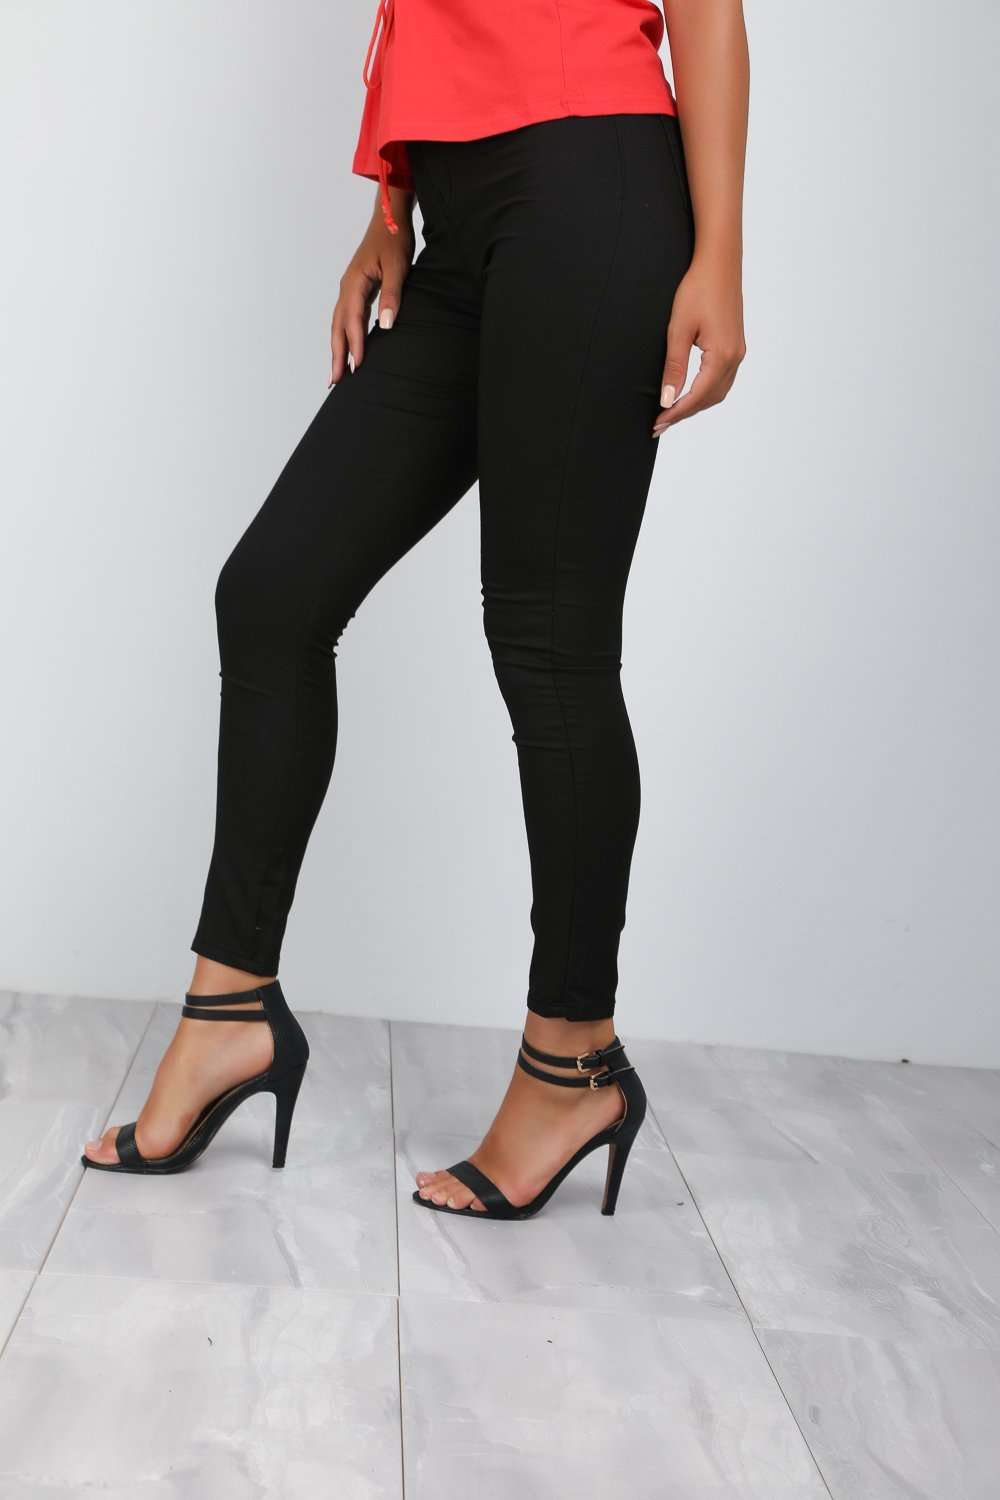 High Waisted Black Stretch Skinny Jeans - bejealous-com